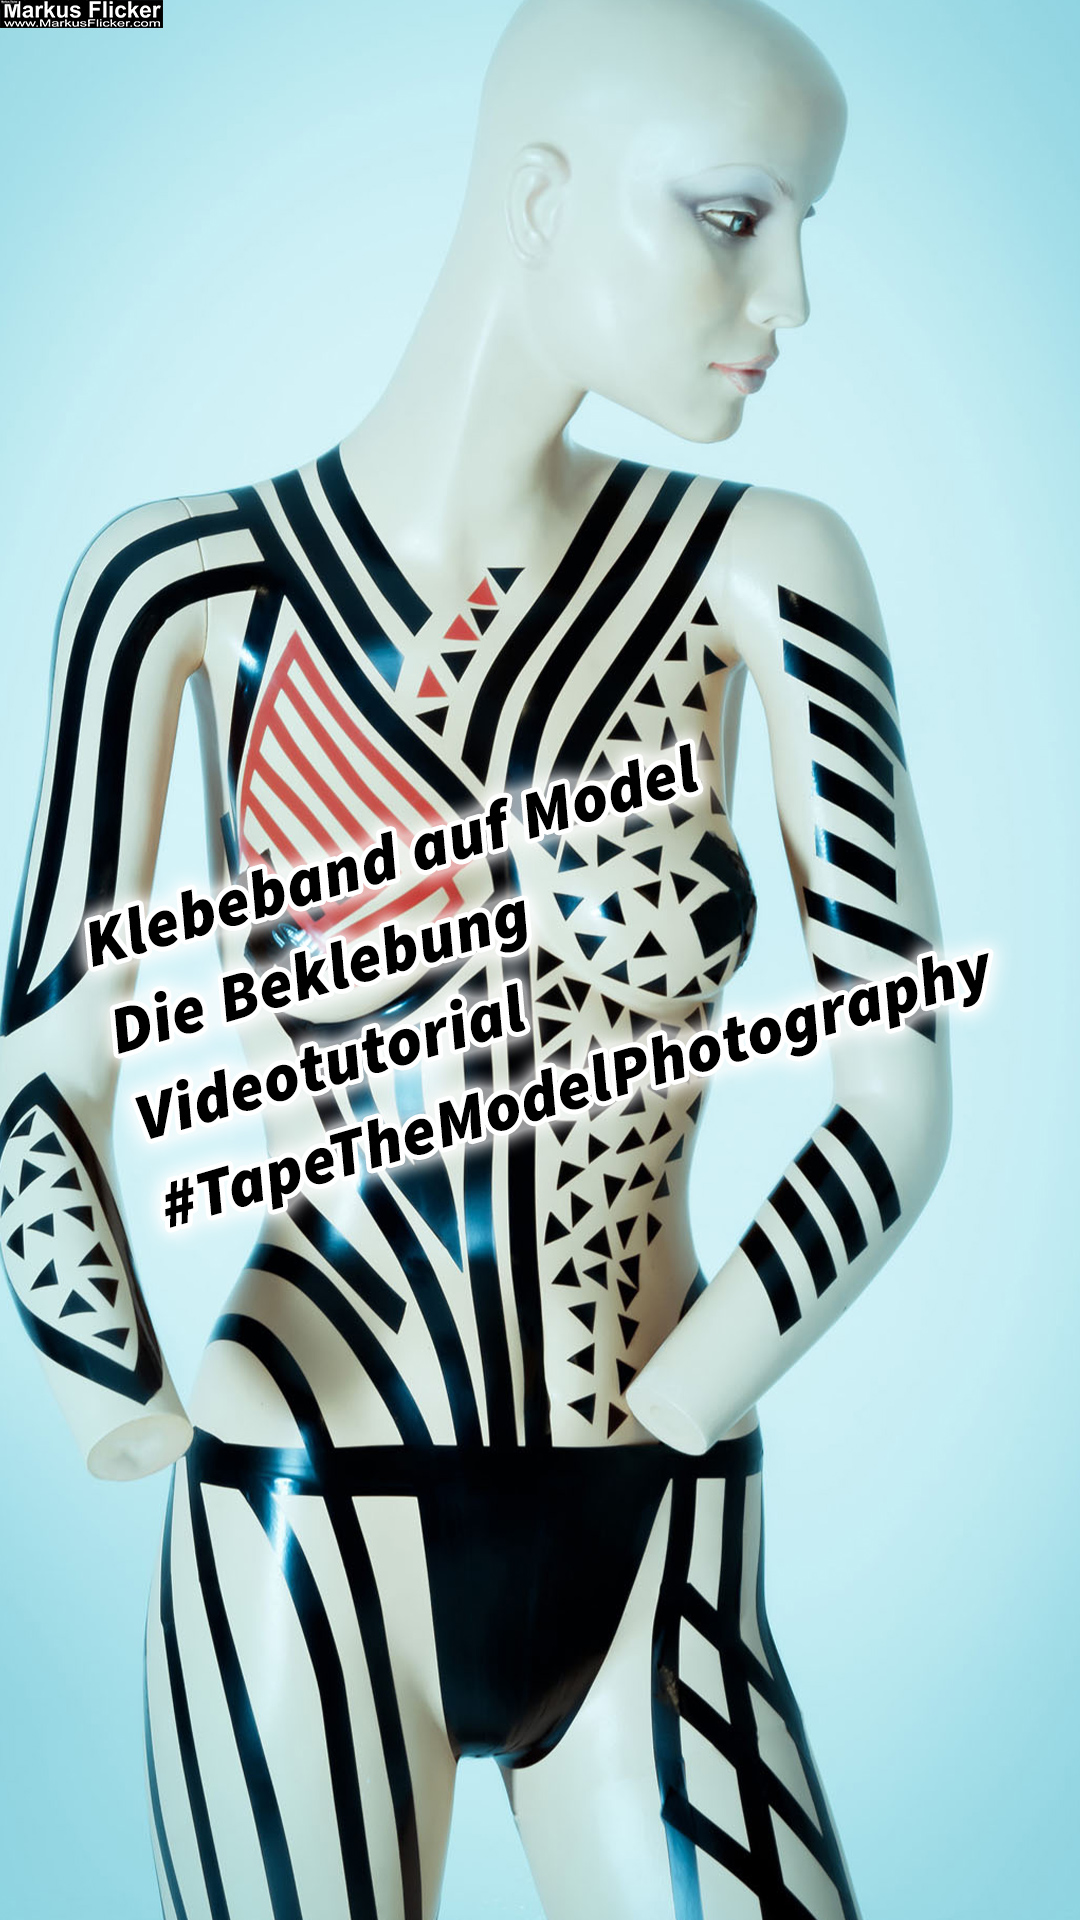 Klebeband auf Model Die Beklebung Videotutorial #TapeTheModelPhotography